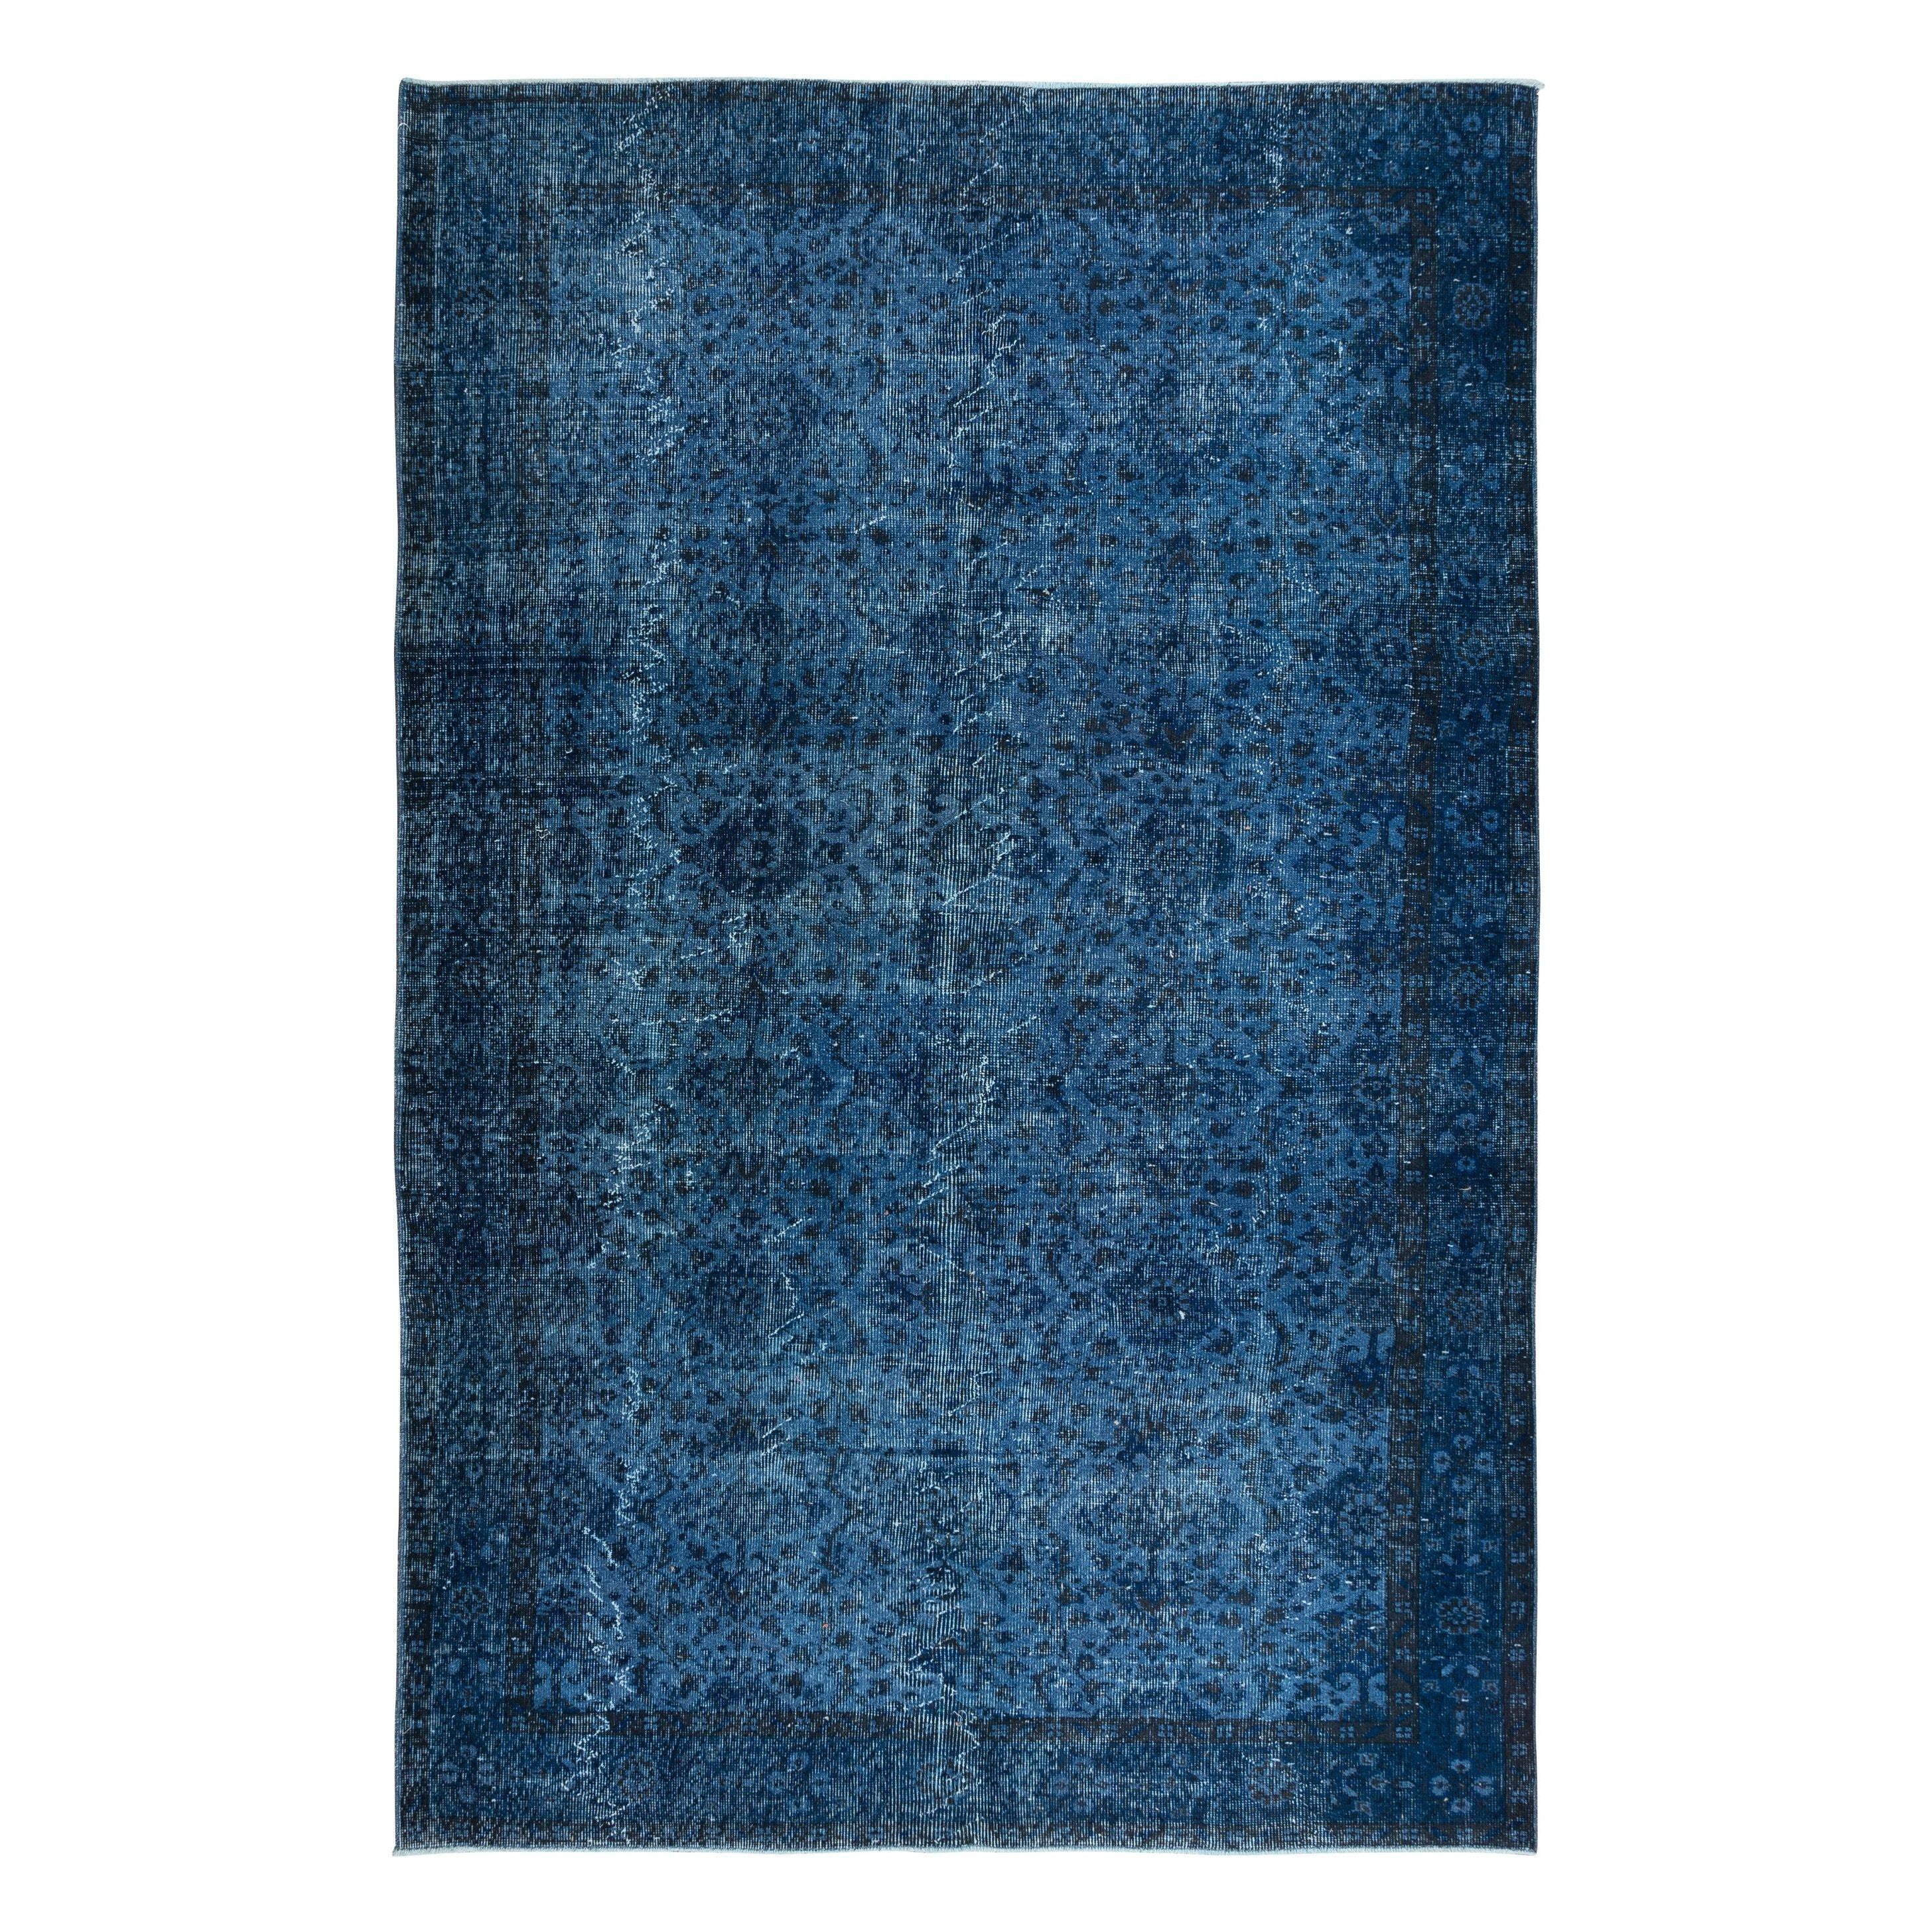 6.3x9.8 Ft Ocean Blue Handmade Area Rug, Decorative Floral Turkish Wool Carpet For Sale